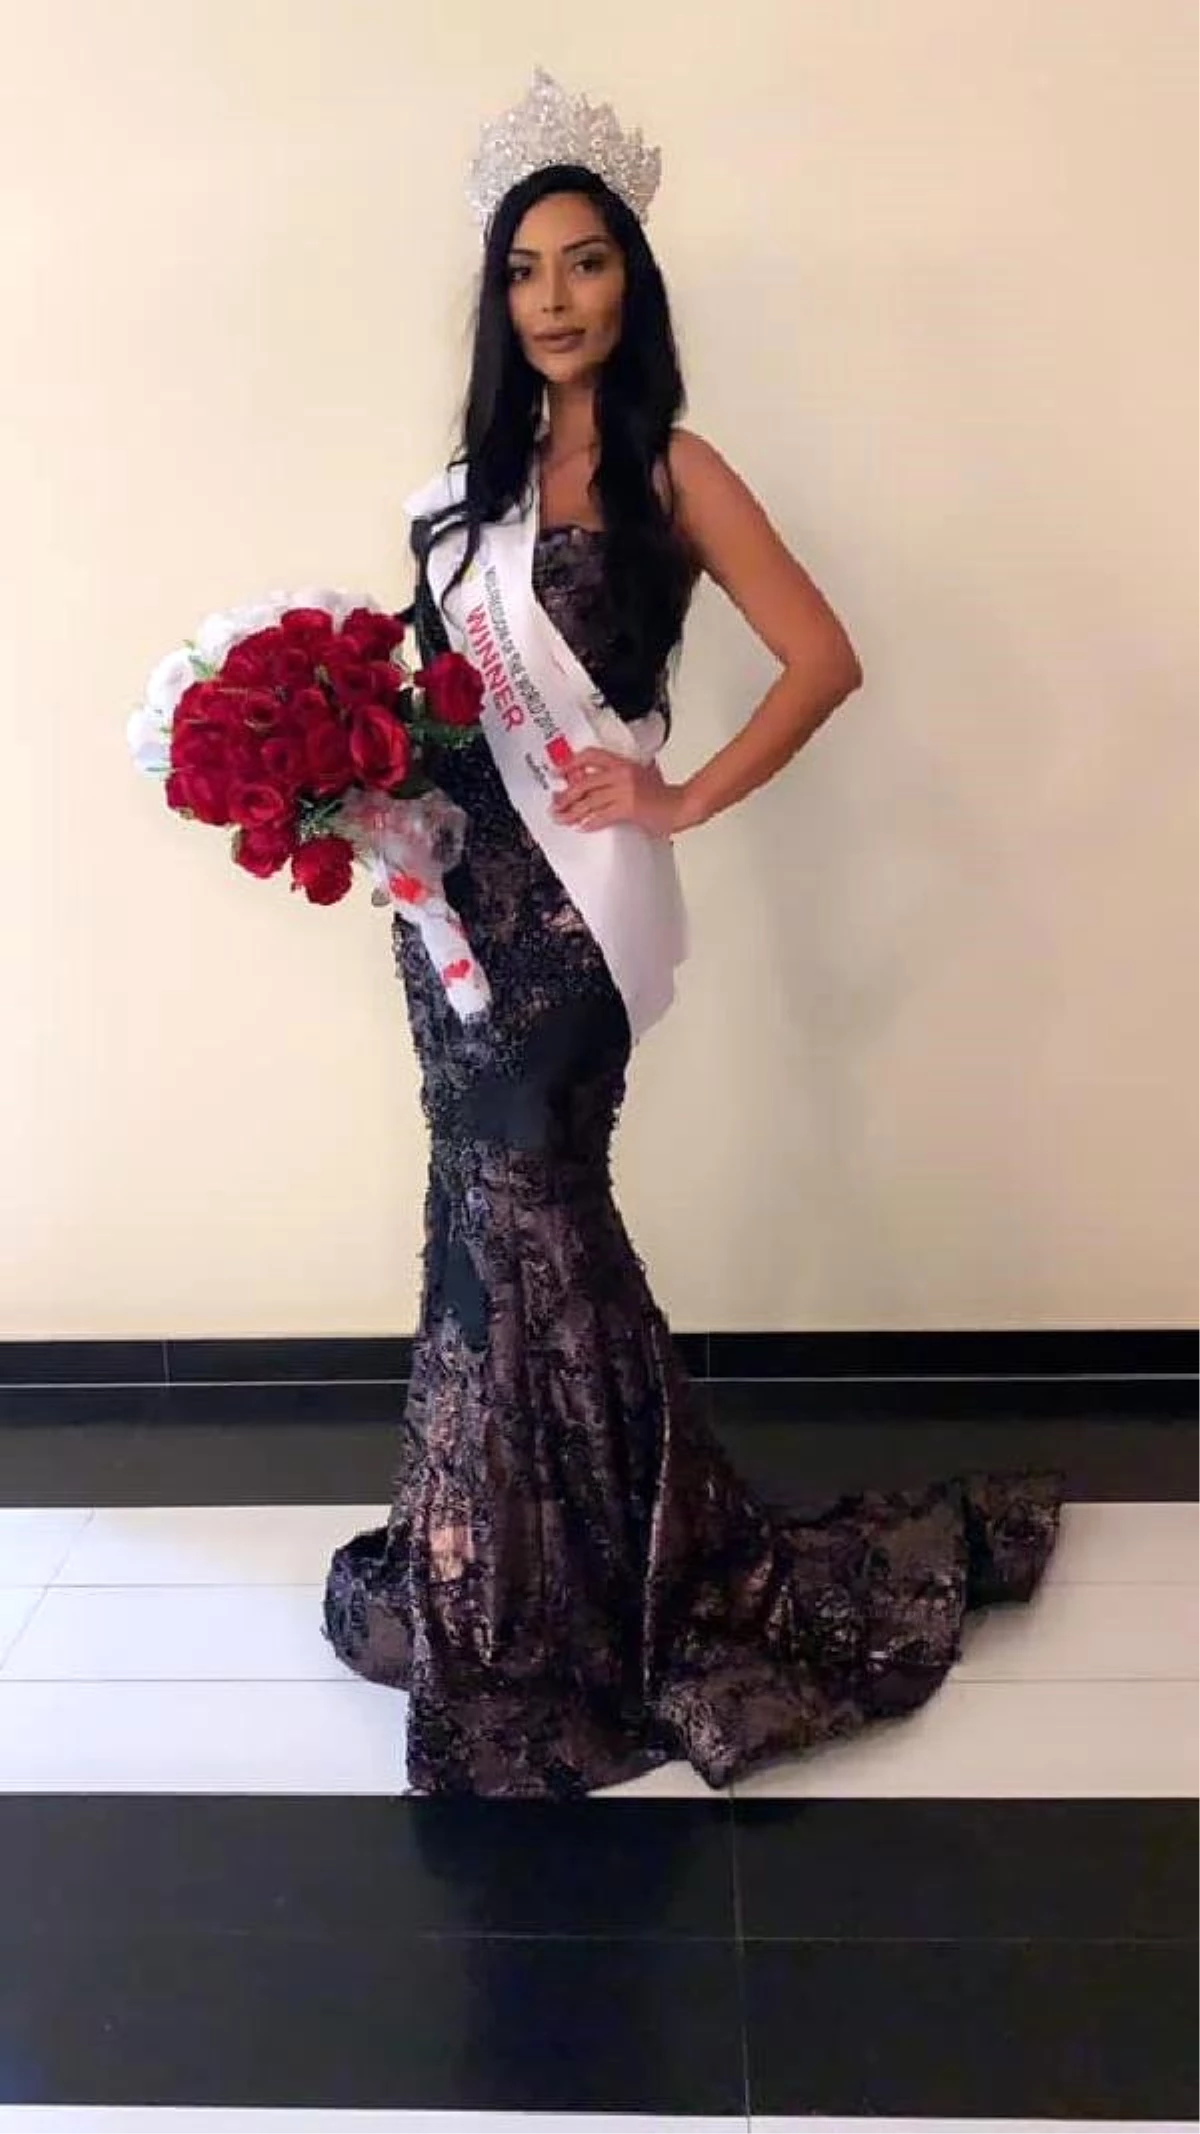 Miss Freedom Of The World 2019 güzellik yarışmasının birincisi Gizem Şahin